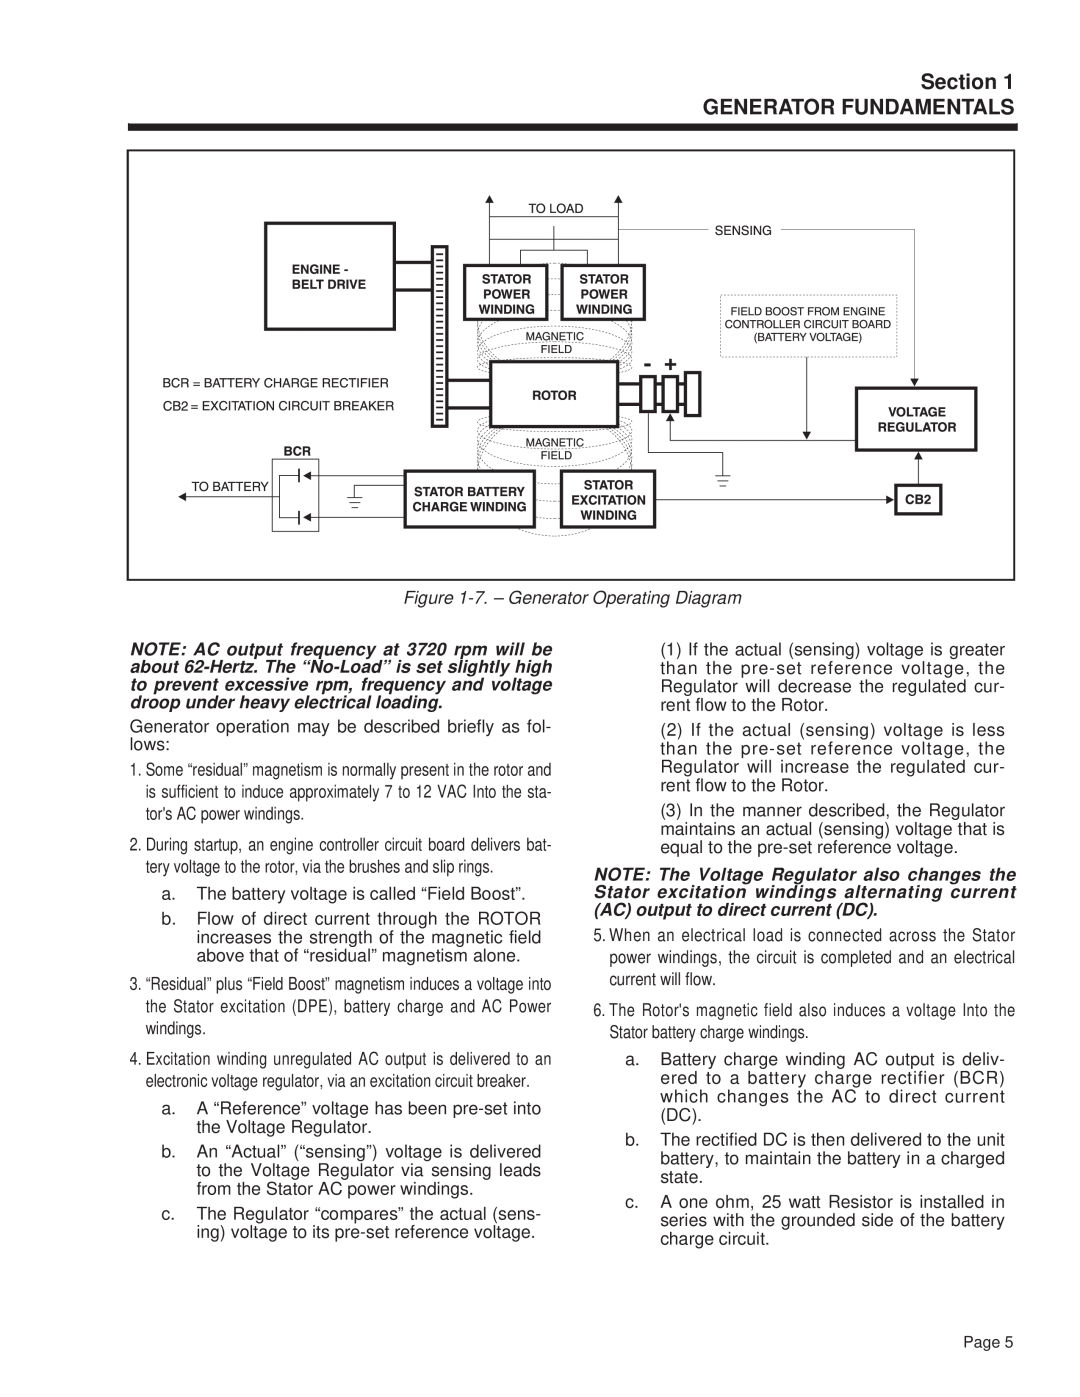 Guardian Technologies 4270 manual 7. - Generator Operating Diagram, Section GENERATOR FUNDAMENTALS 